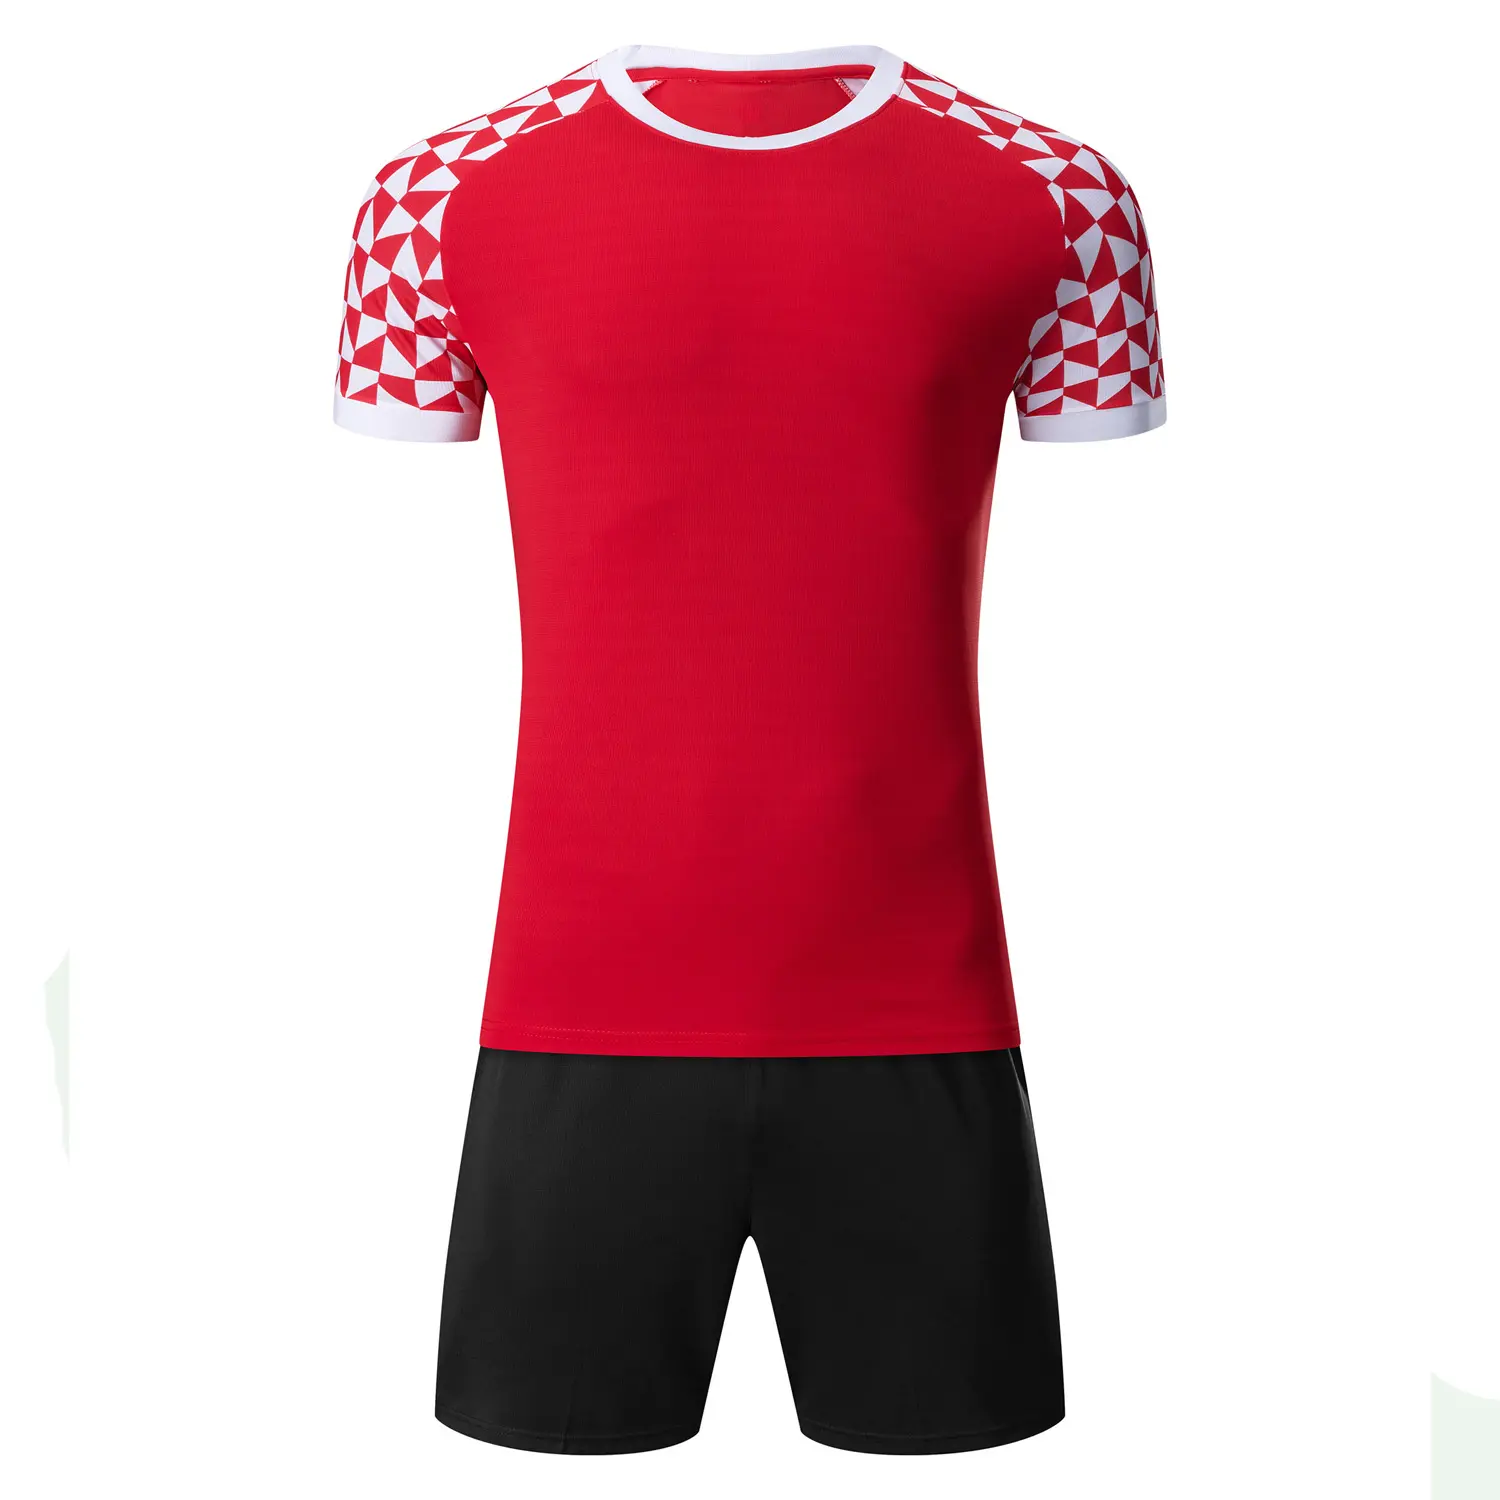 Conjunto de uniforme de futebol, venda quente, conjunto de futebol, equipe de futebol de subolmação, kit de treinamento de uniforme de futebol